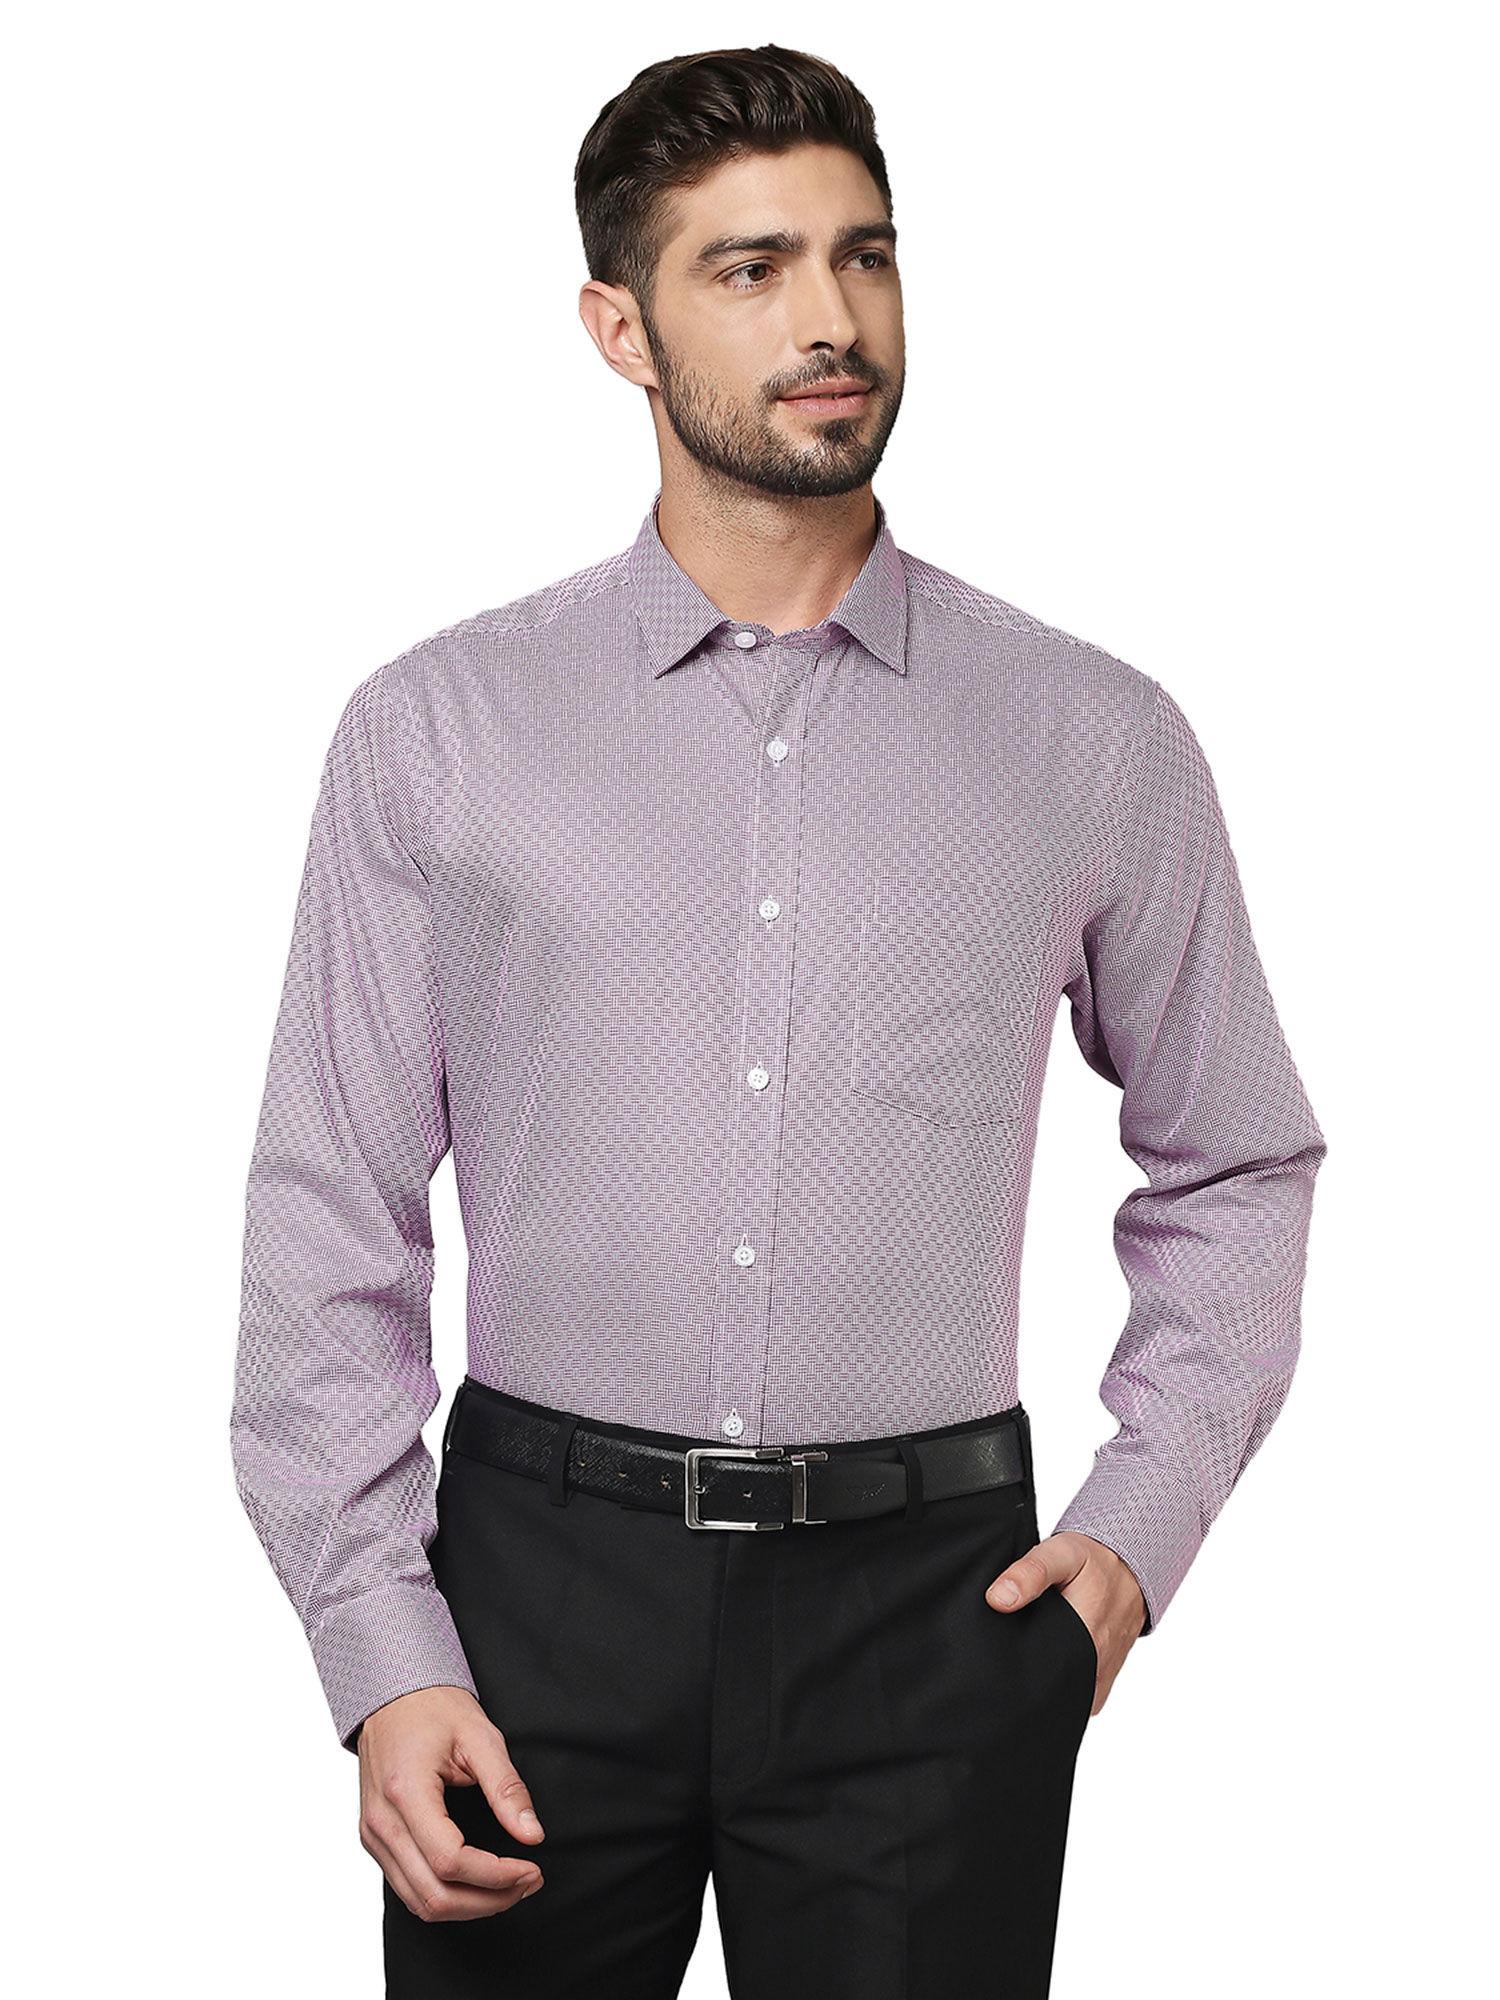 men-medium-purple-shirt